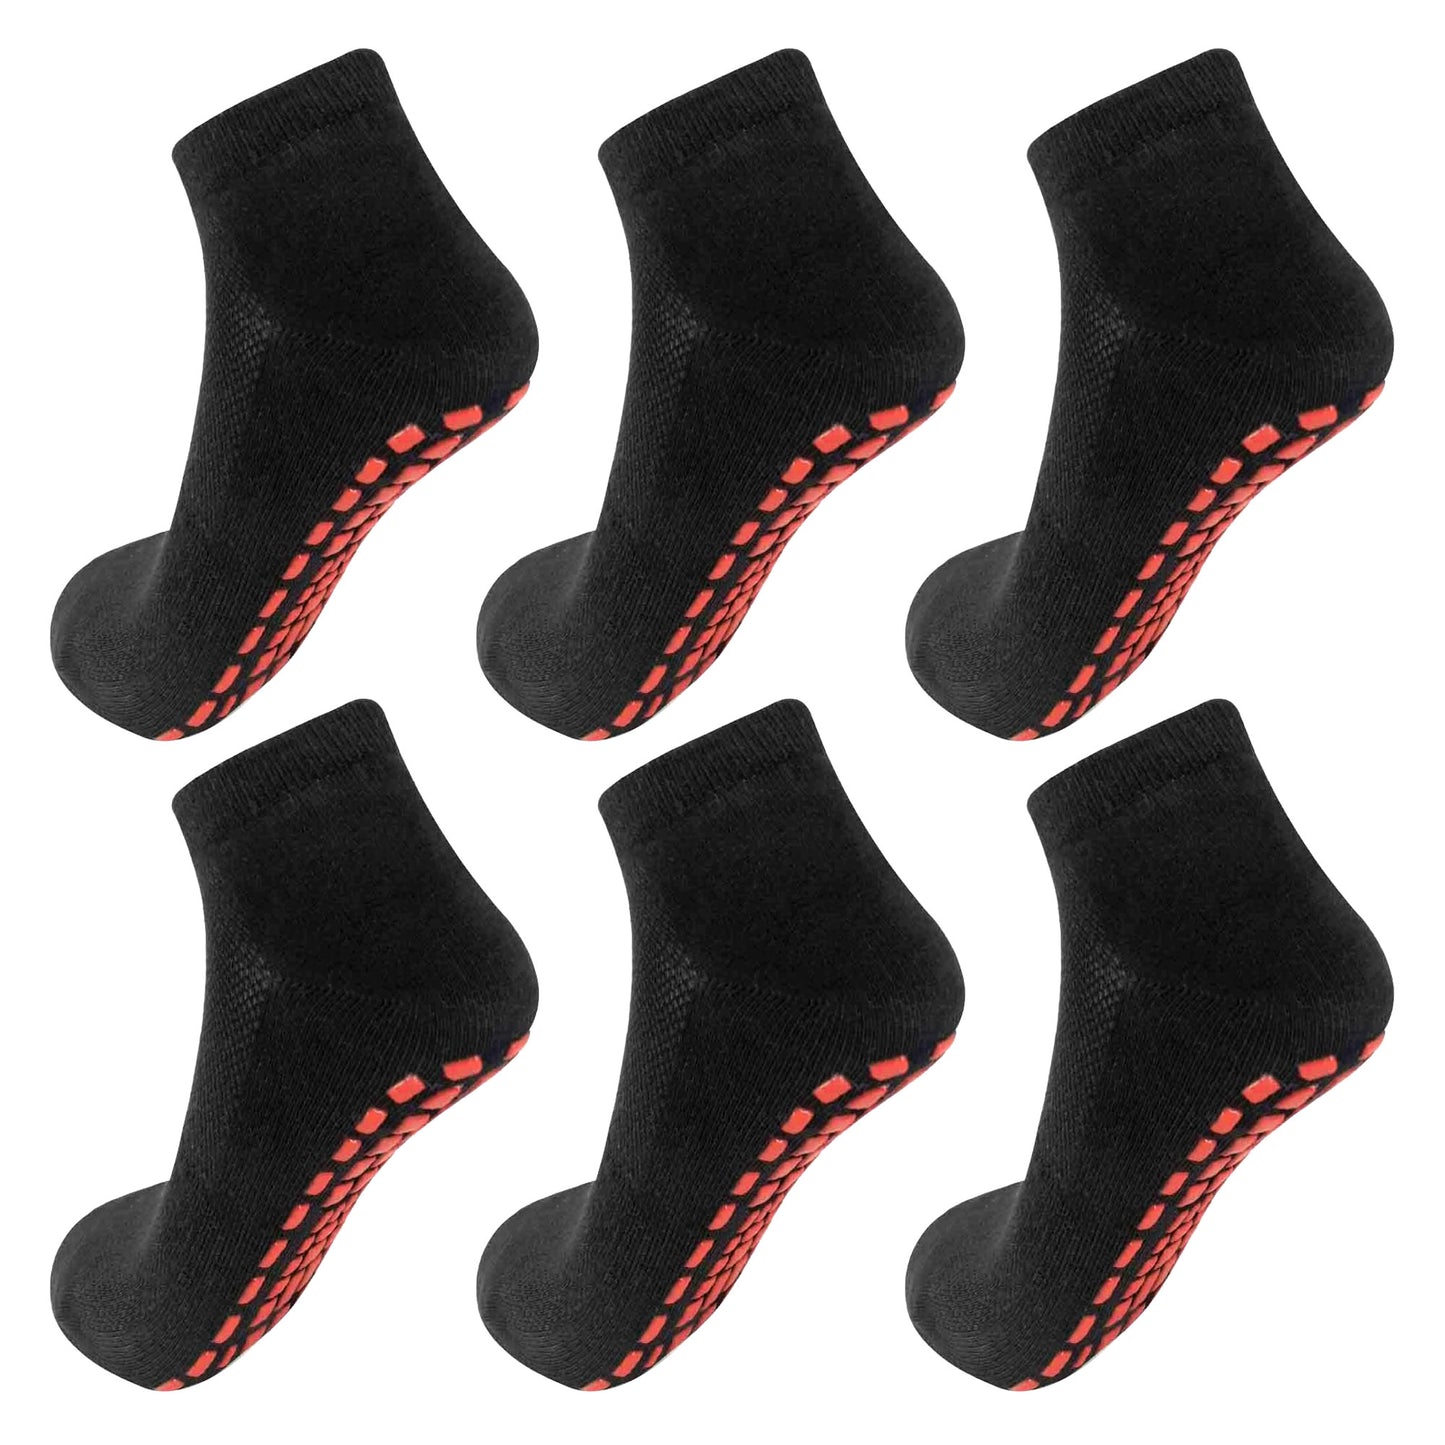 3Pairs Non Slip Grip Socks -Anti Slip Soccer Socks Sports Grip Socks Anti Non Skid Basketball Socks Soccer Socks unisex Grip Socks Yoga Socks(Black)